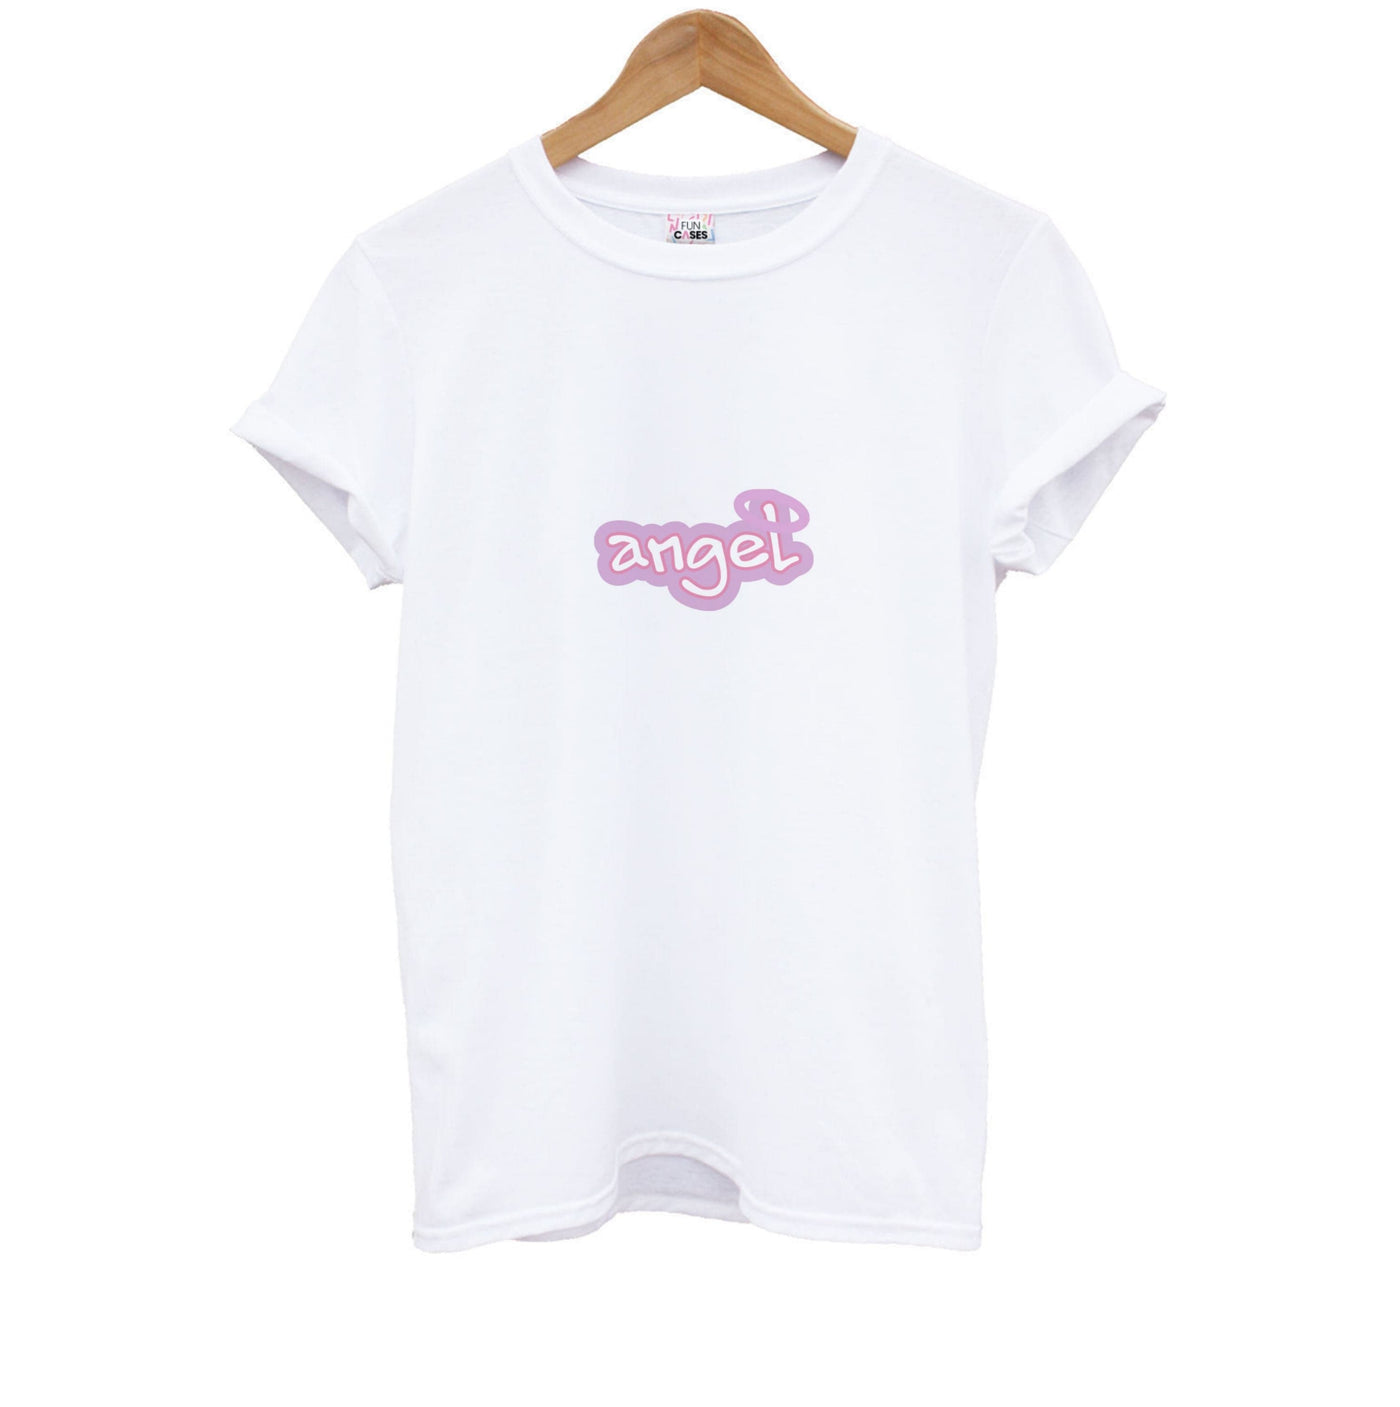 Angel - Loren Gray Kids T-Shirt